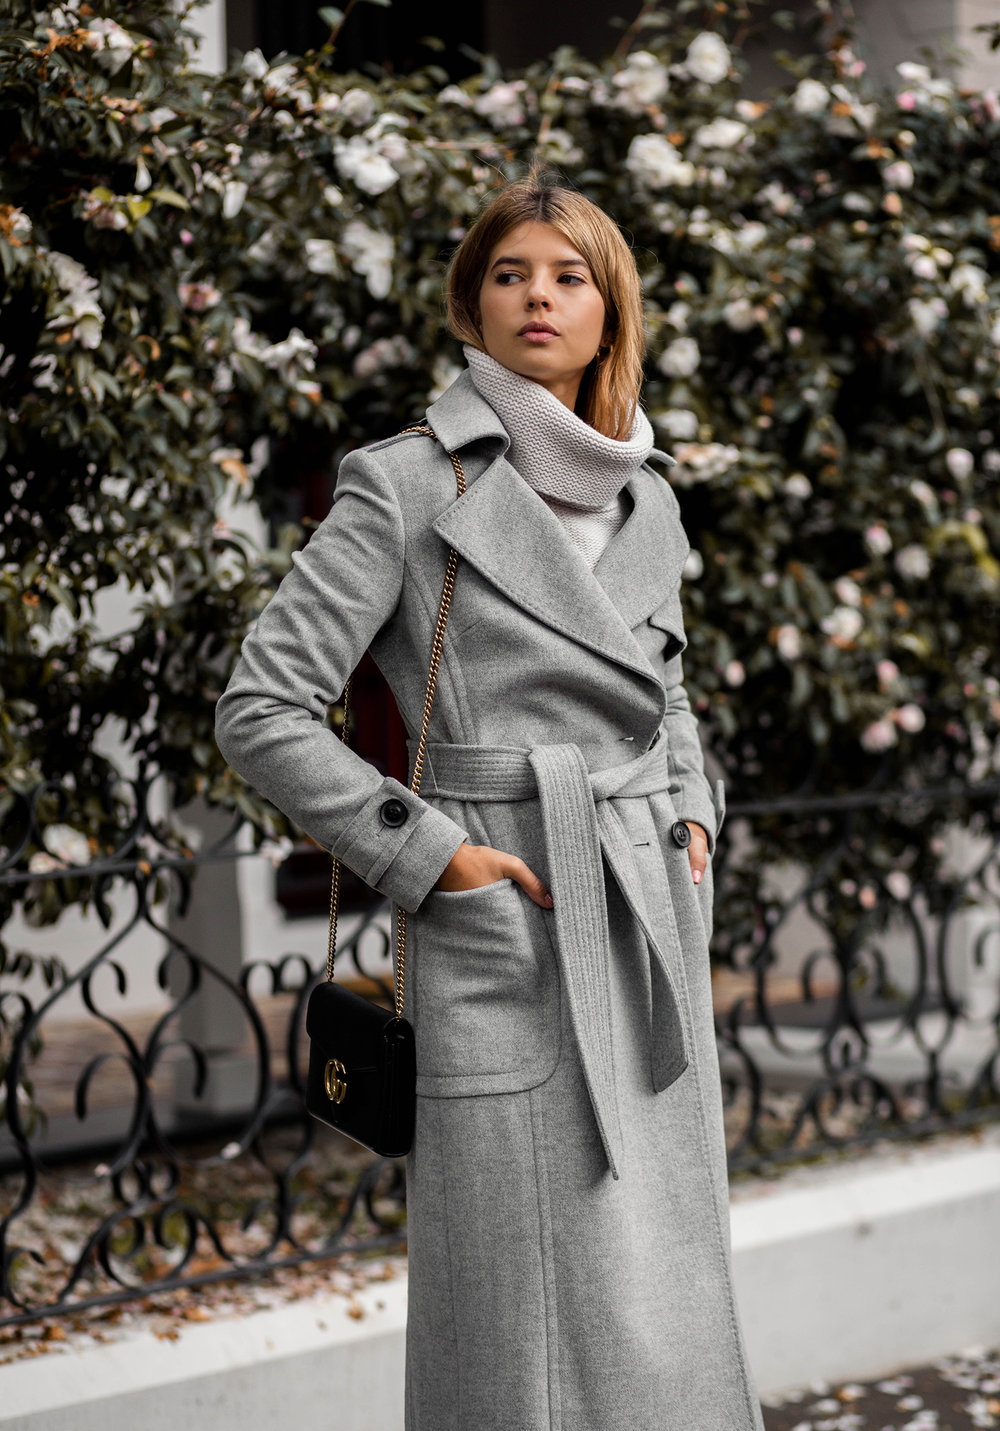 Grey On Grey... New Seasons Layers | BADLANDS | Bloglovin’